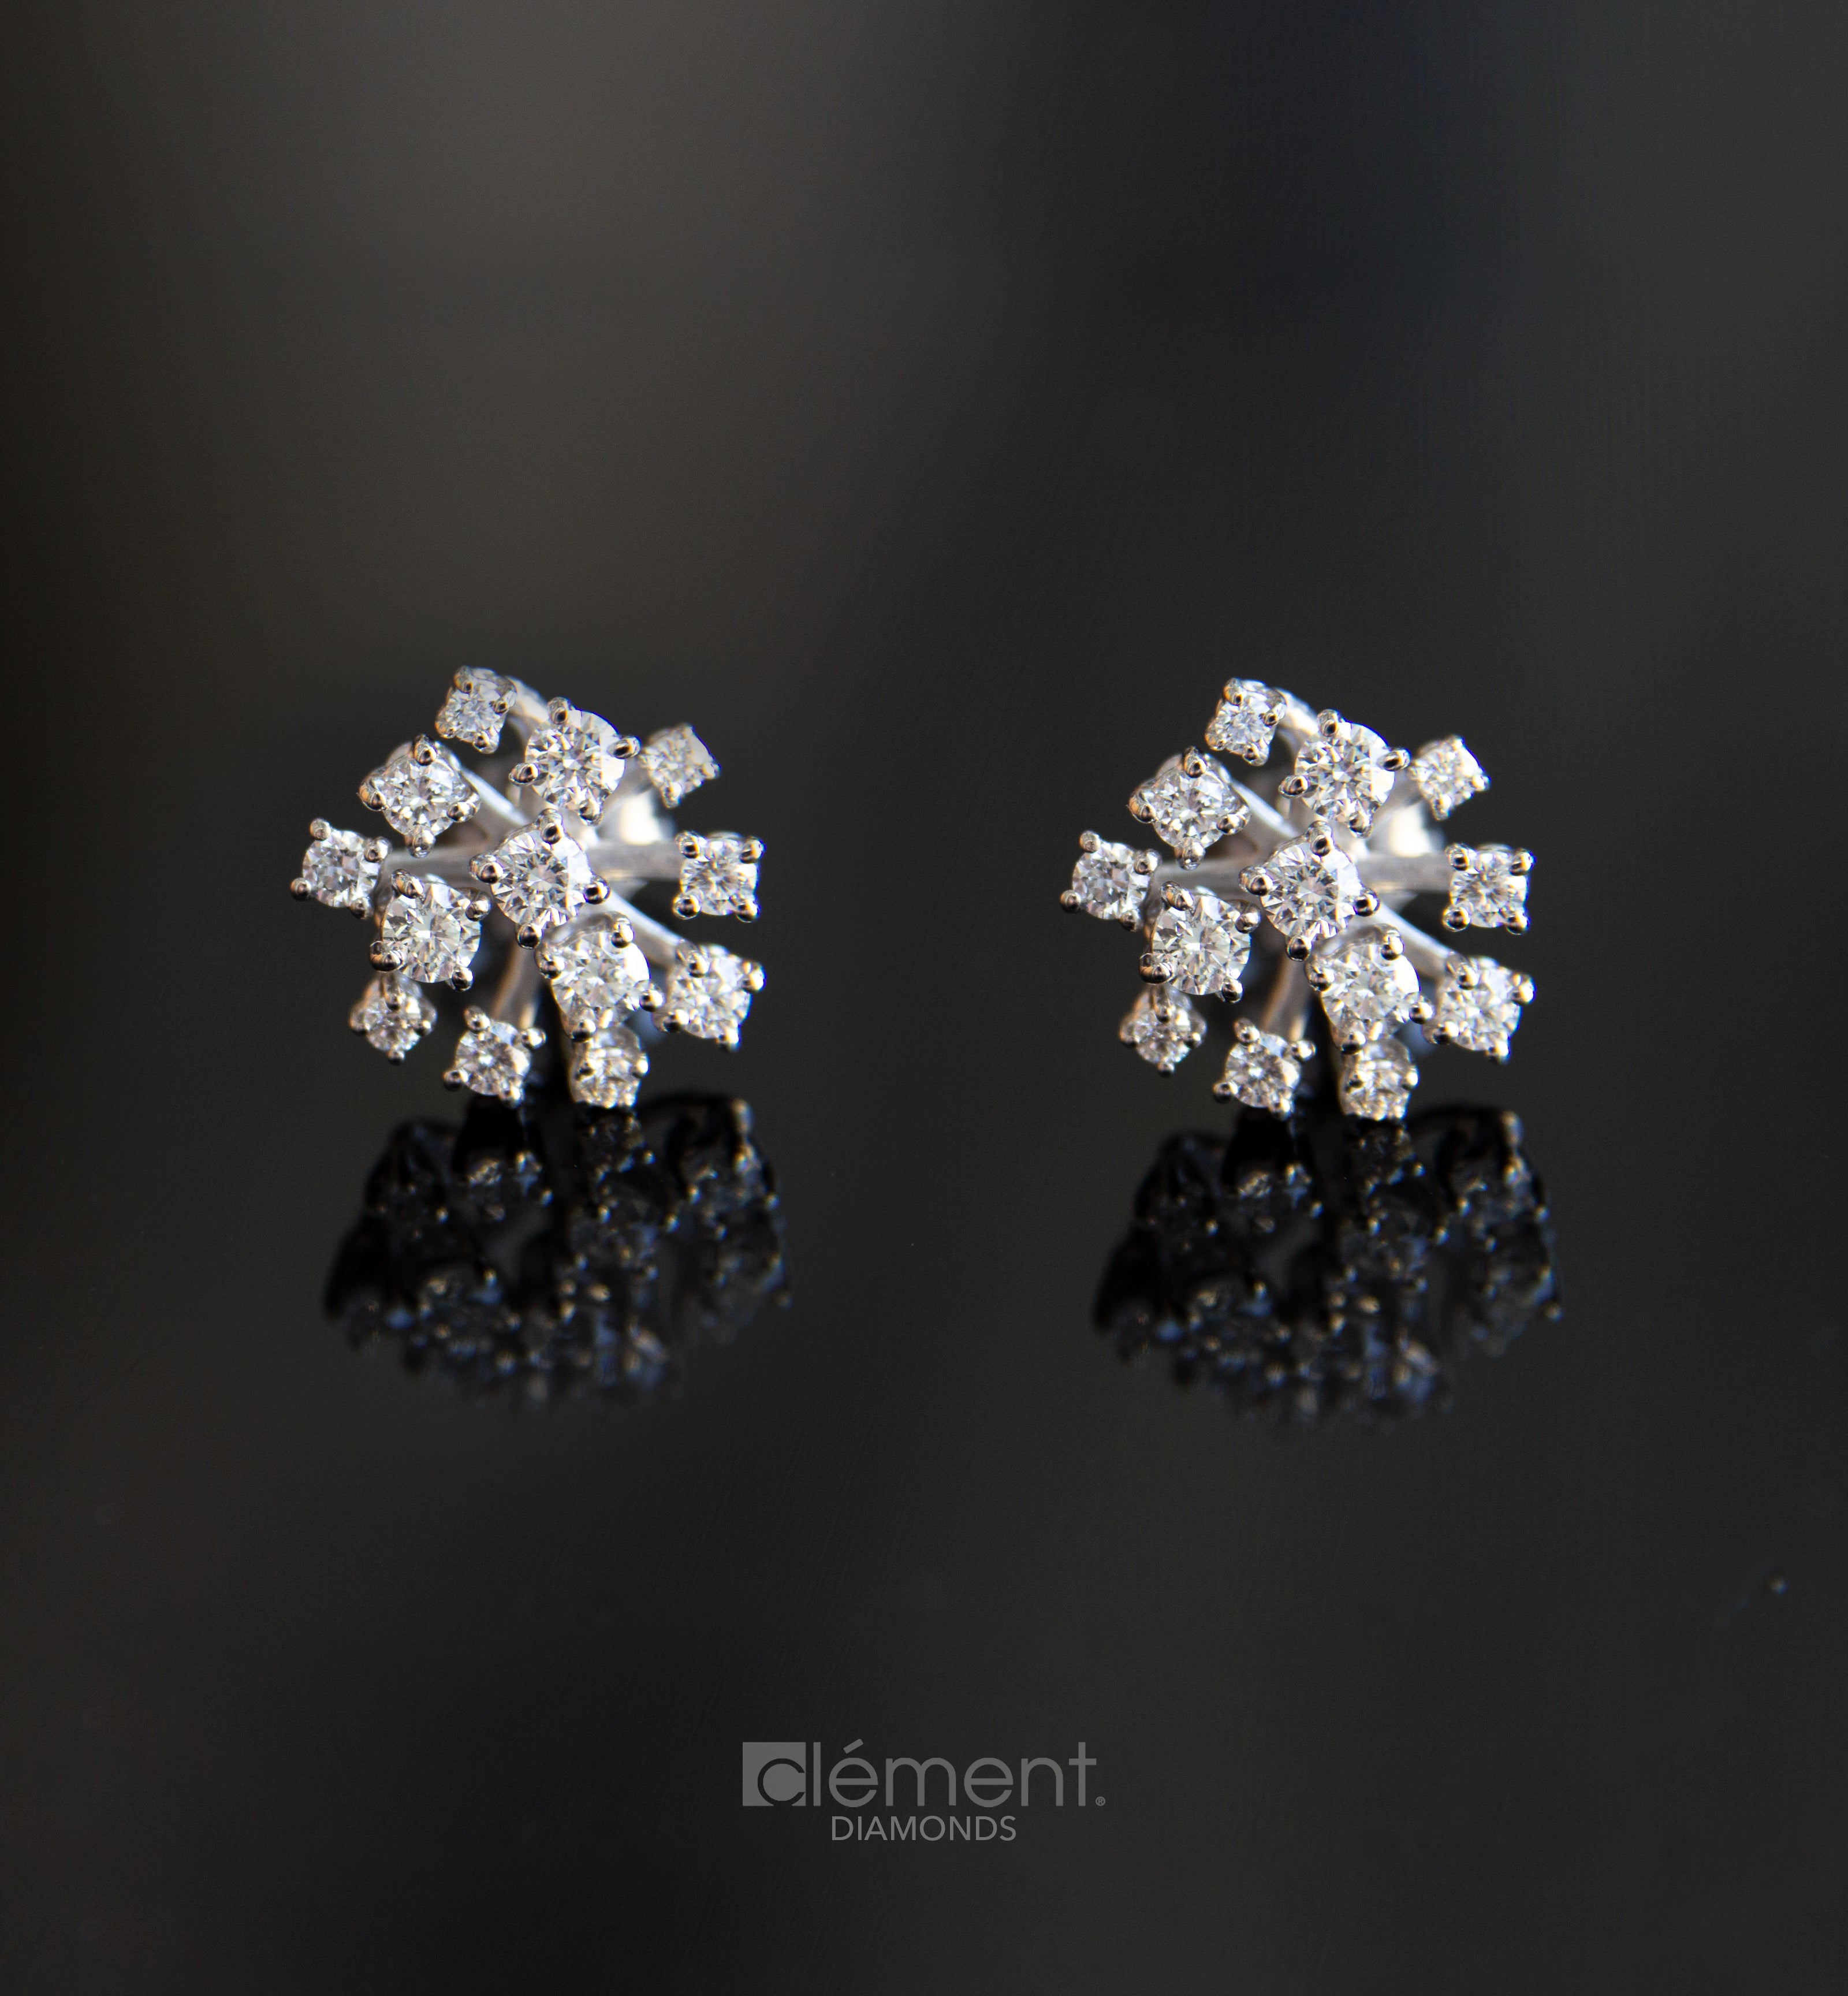 18ct White Gold Explosion of Diamond Earrings